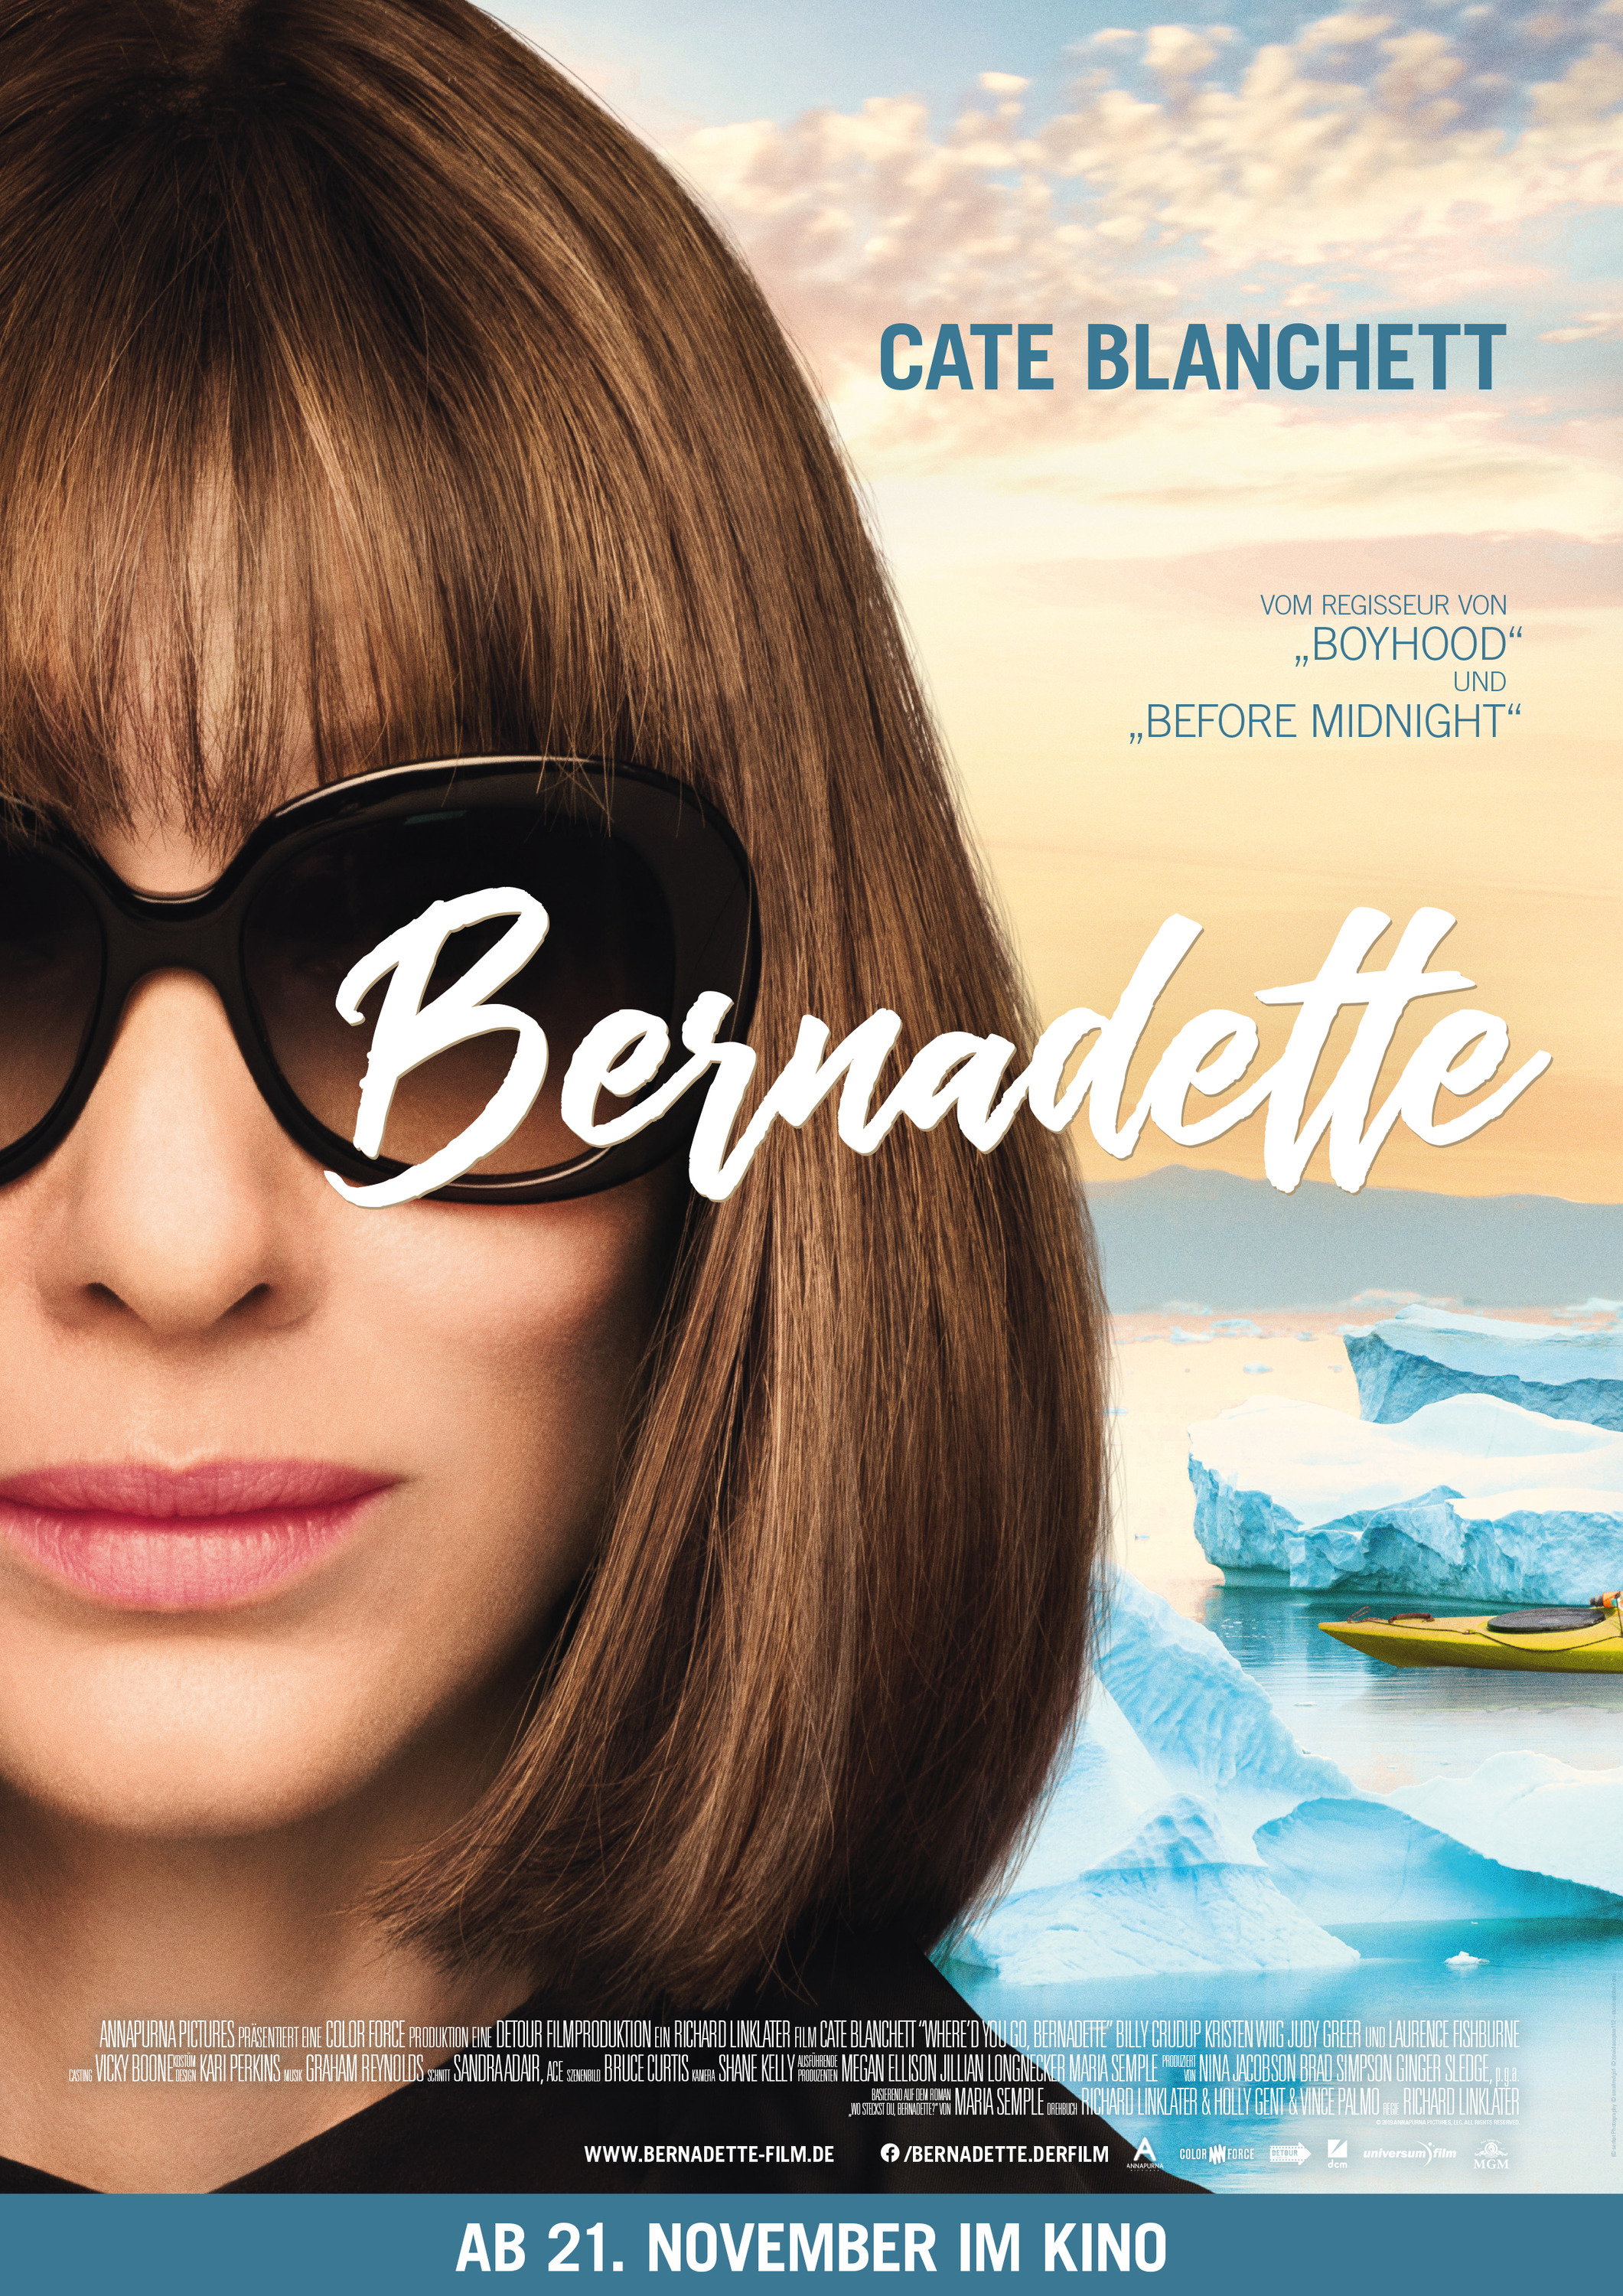 Mega Sized Movie Poster Image for Where'd You Go, Bernadette (#4 of 4)